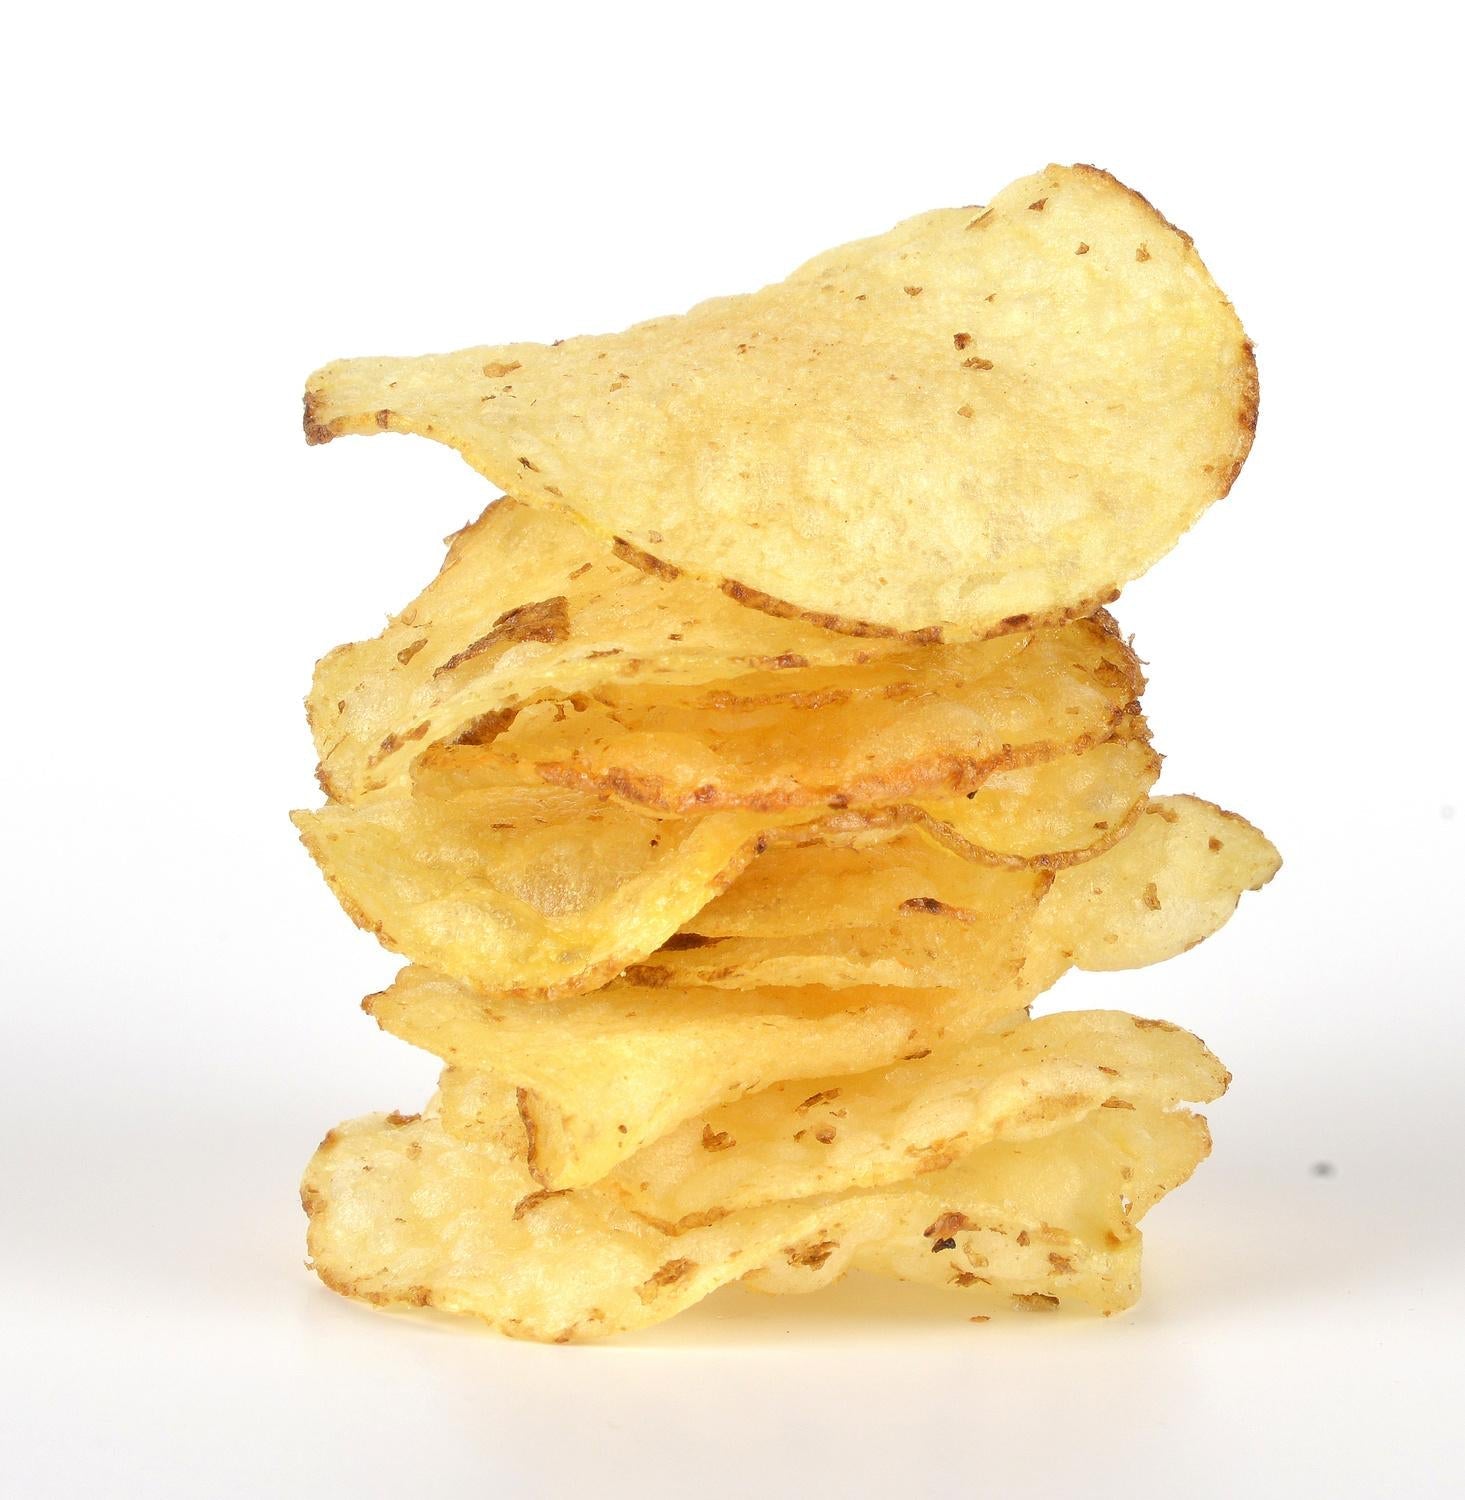 Uglies Original Sea Salt Kettle Chips 2 oz Bag